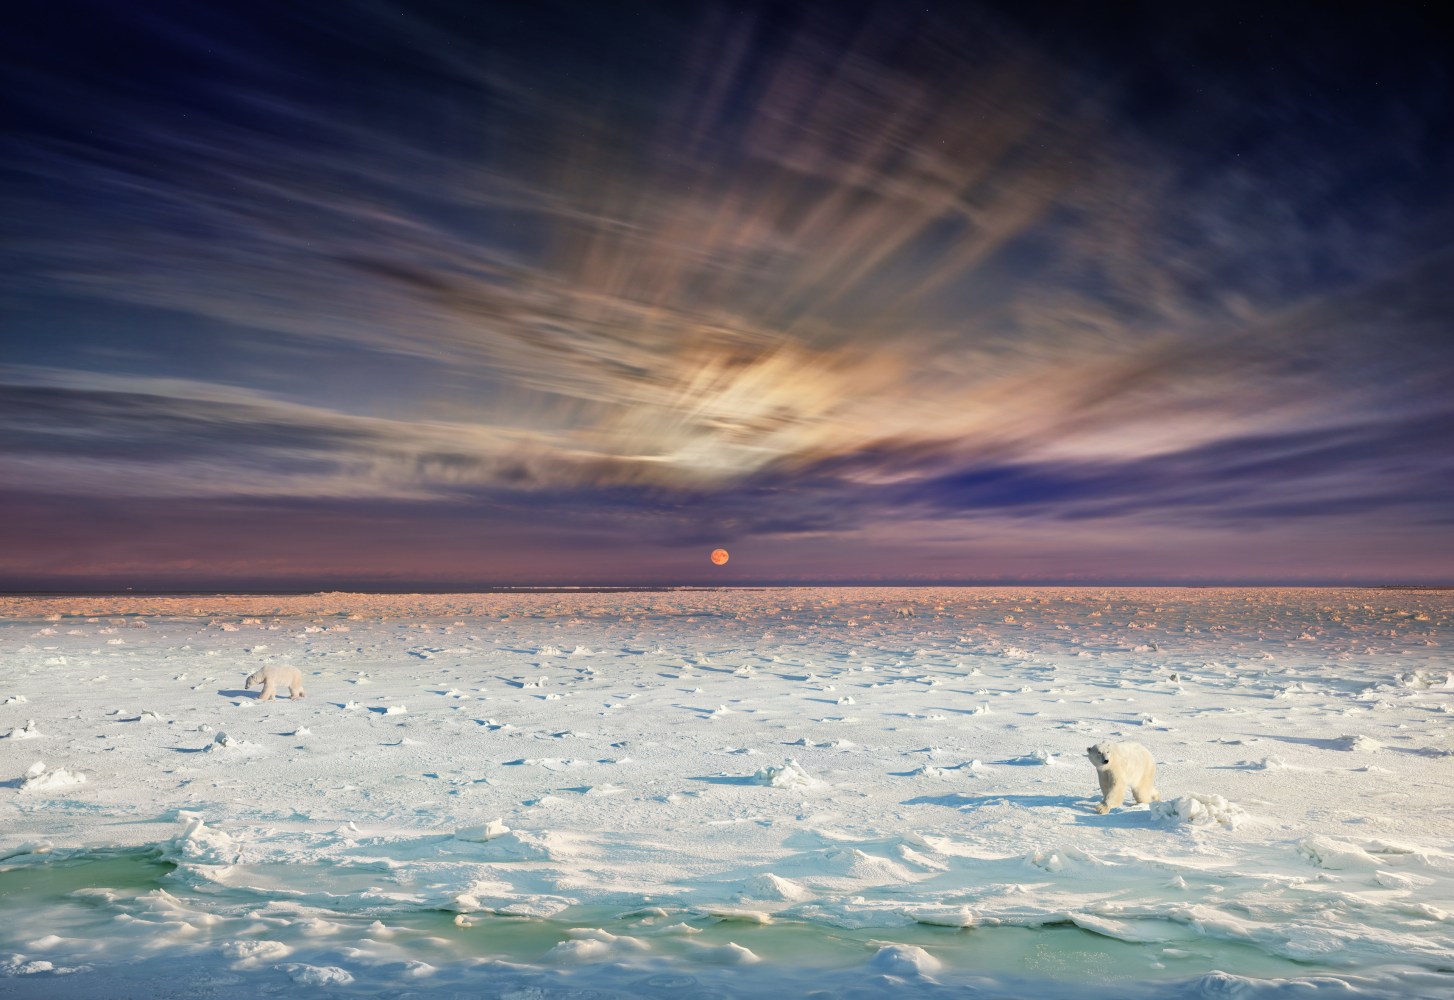 Stephen Wilkes, Polar Bears, Churchill, Manitoba, Canada, Day to Night, 2019